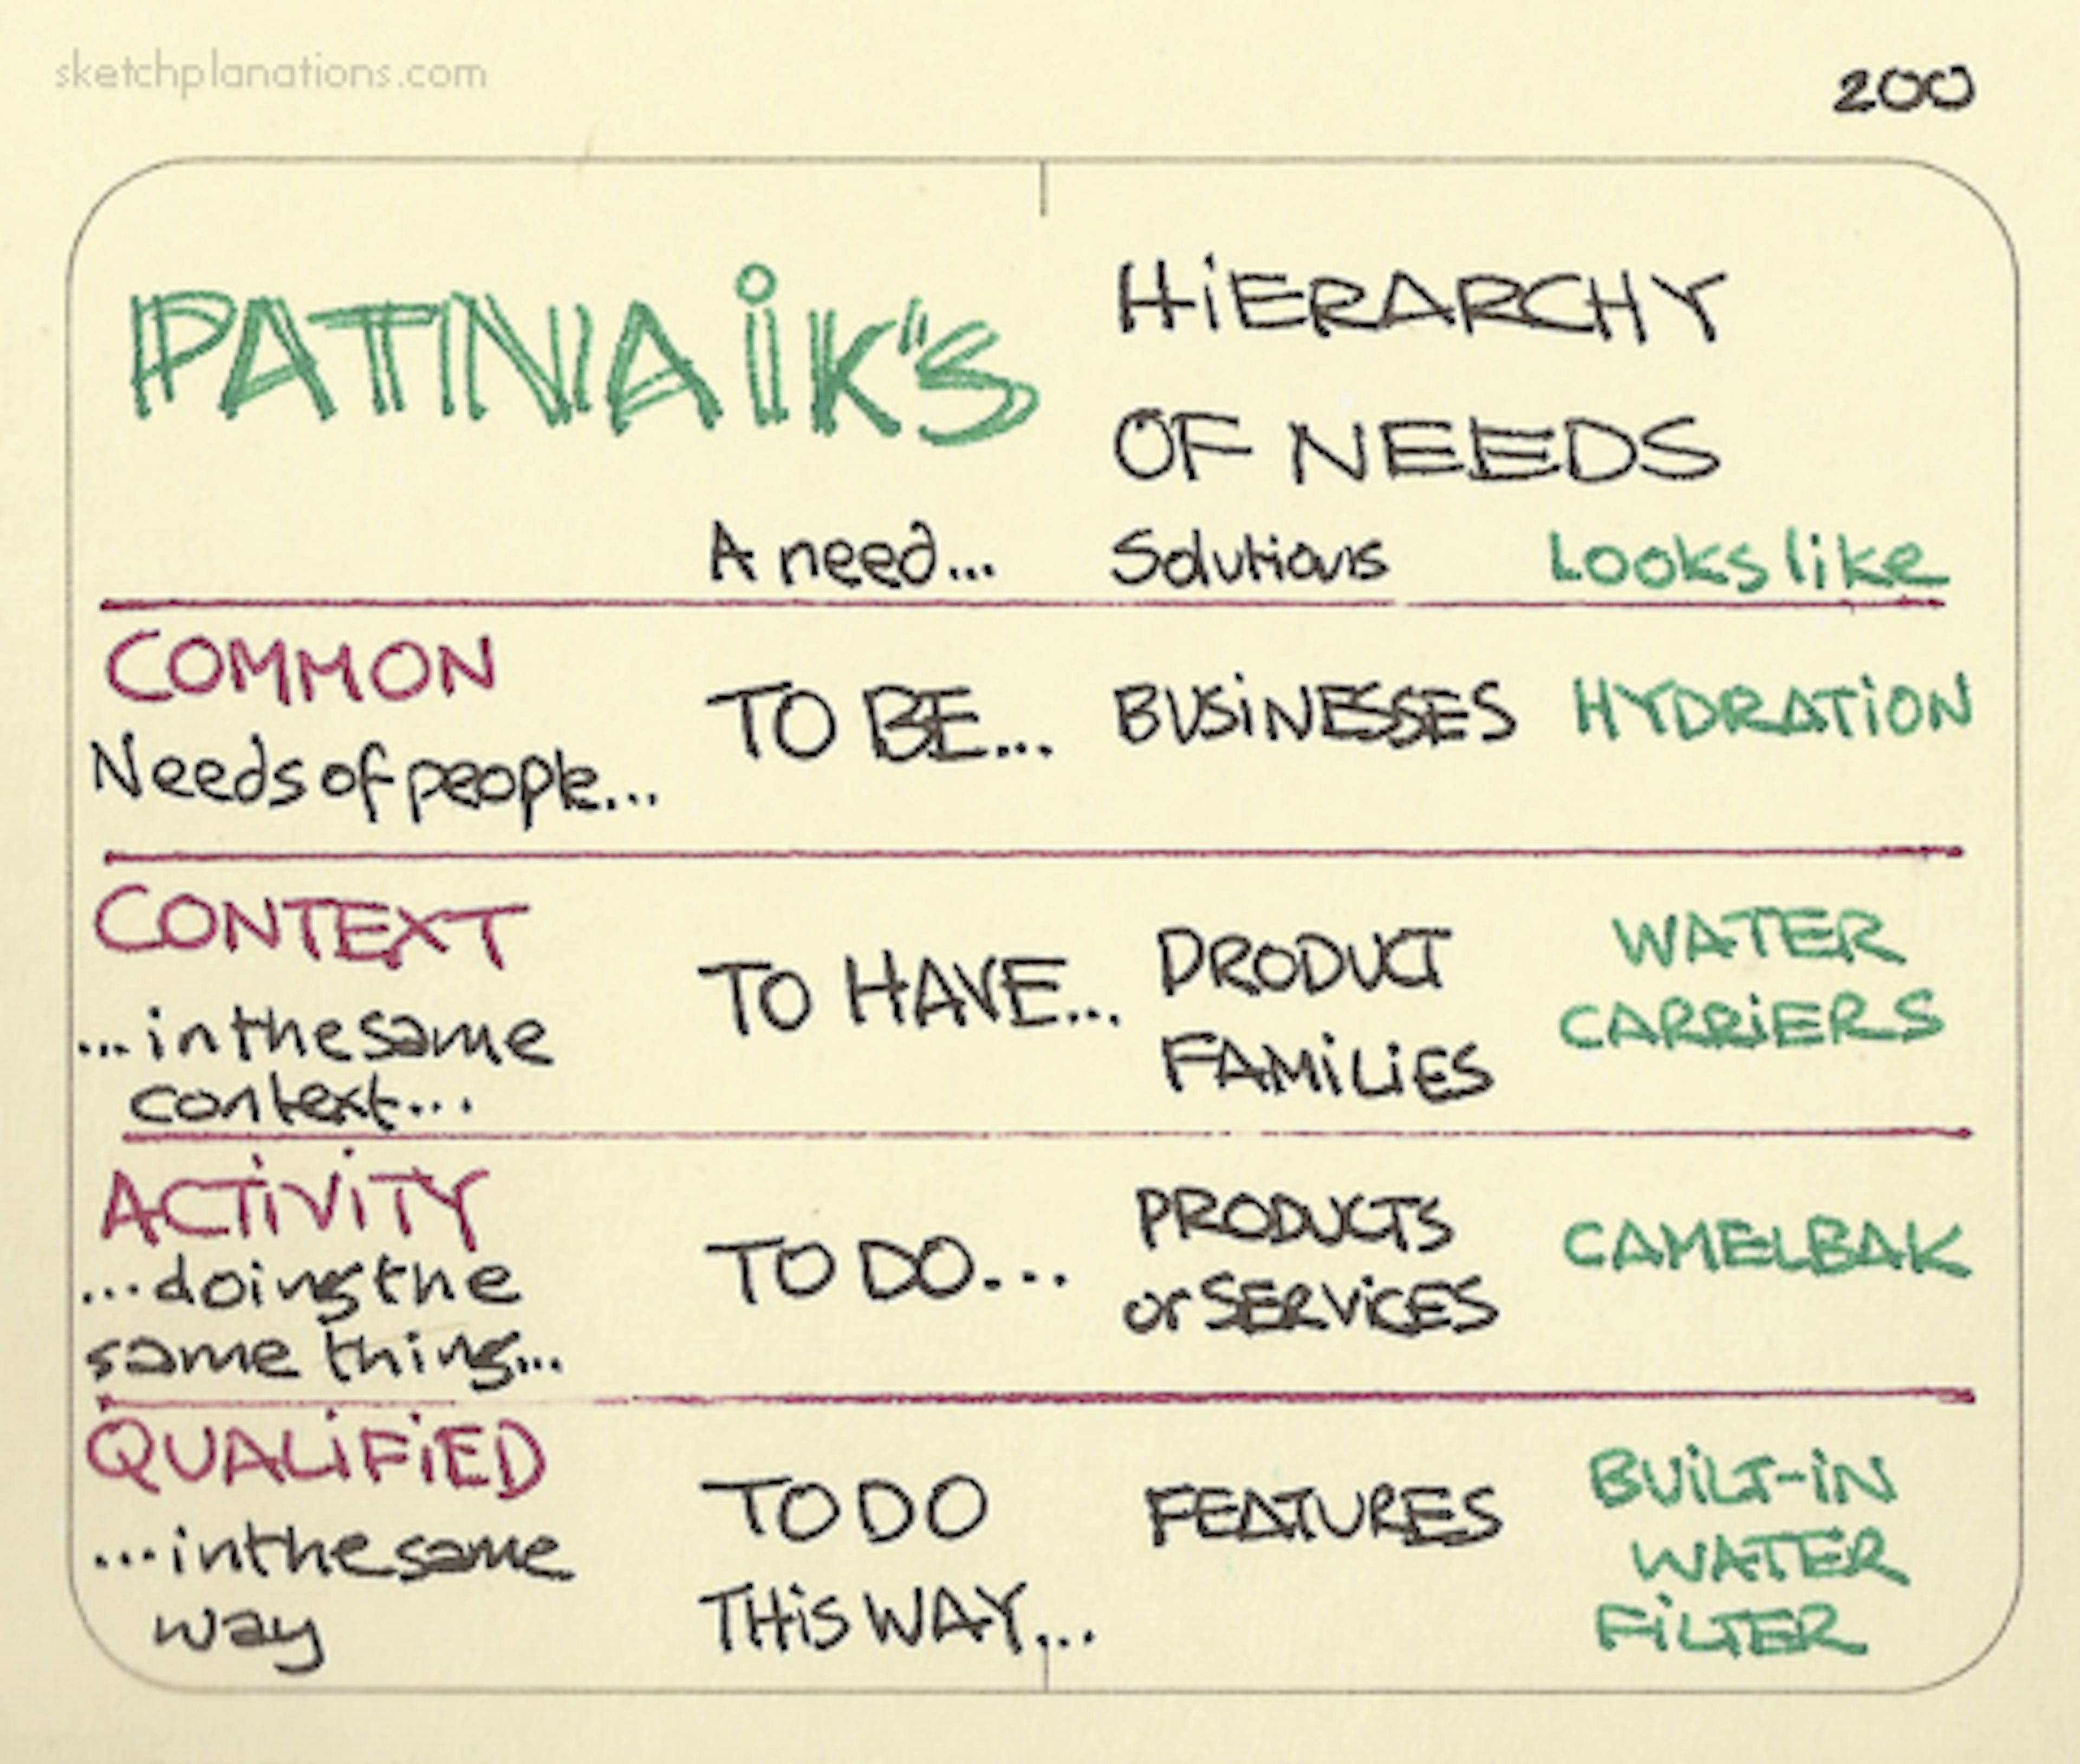 Patnaik’s Hierarchy of Needs - Sketchplanations